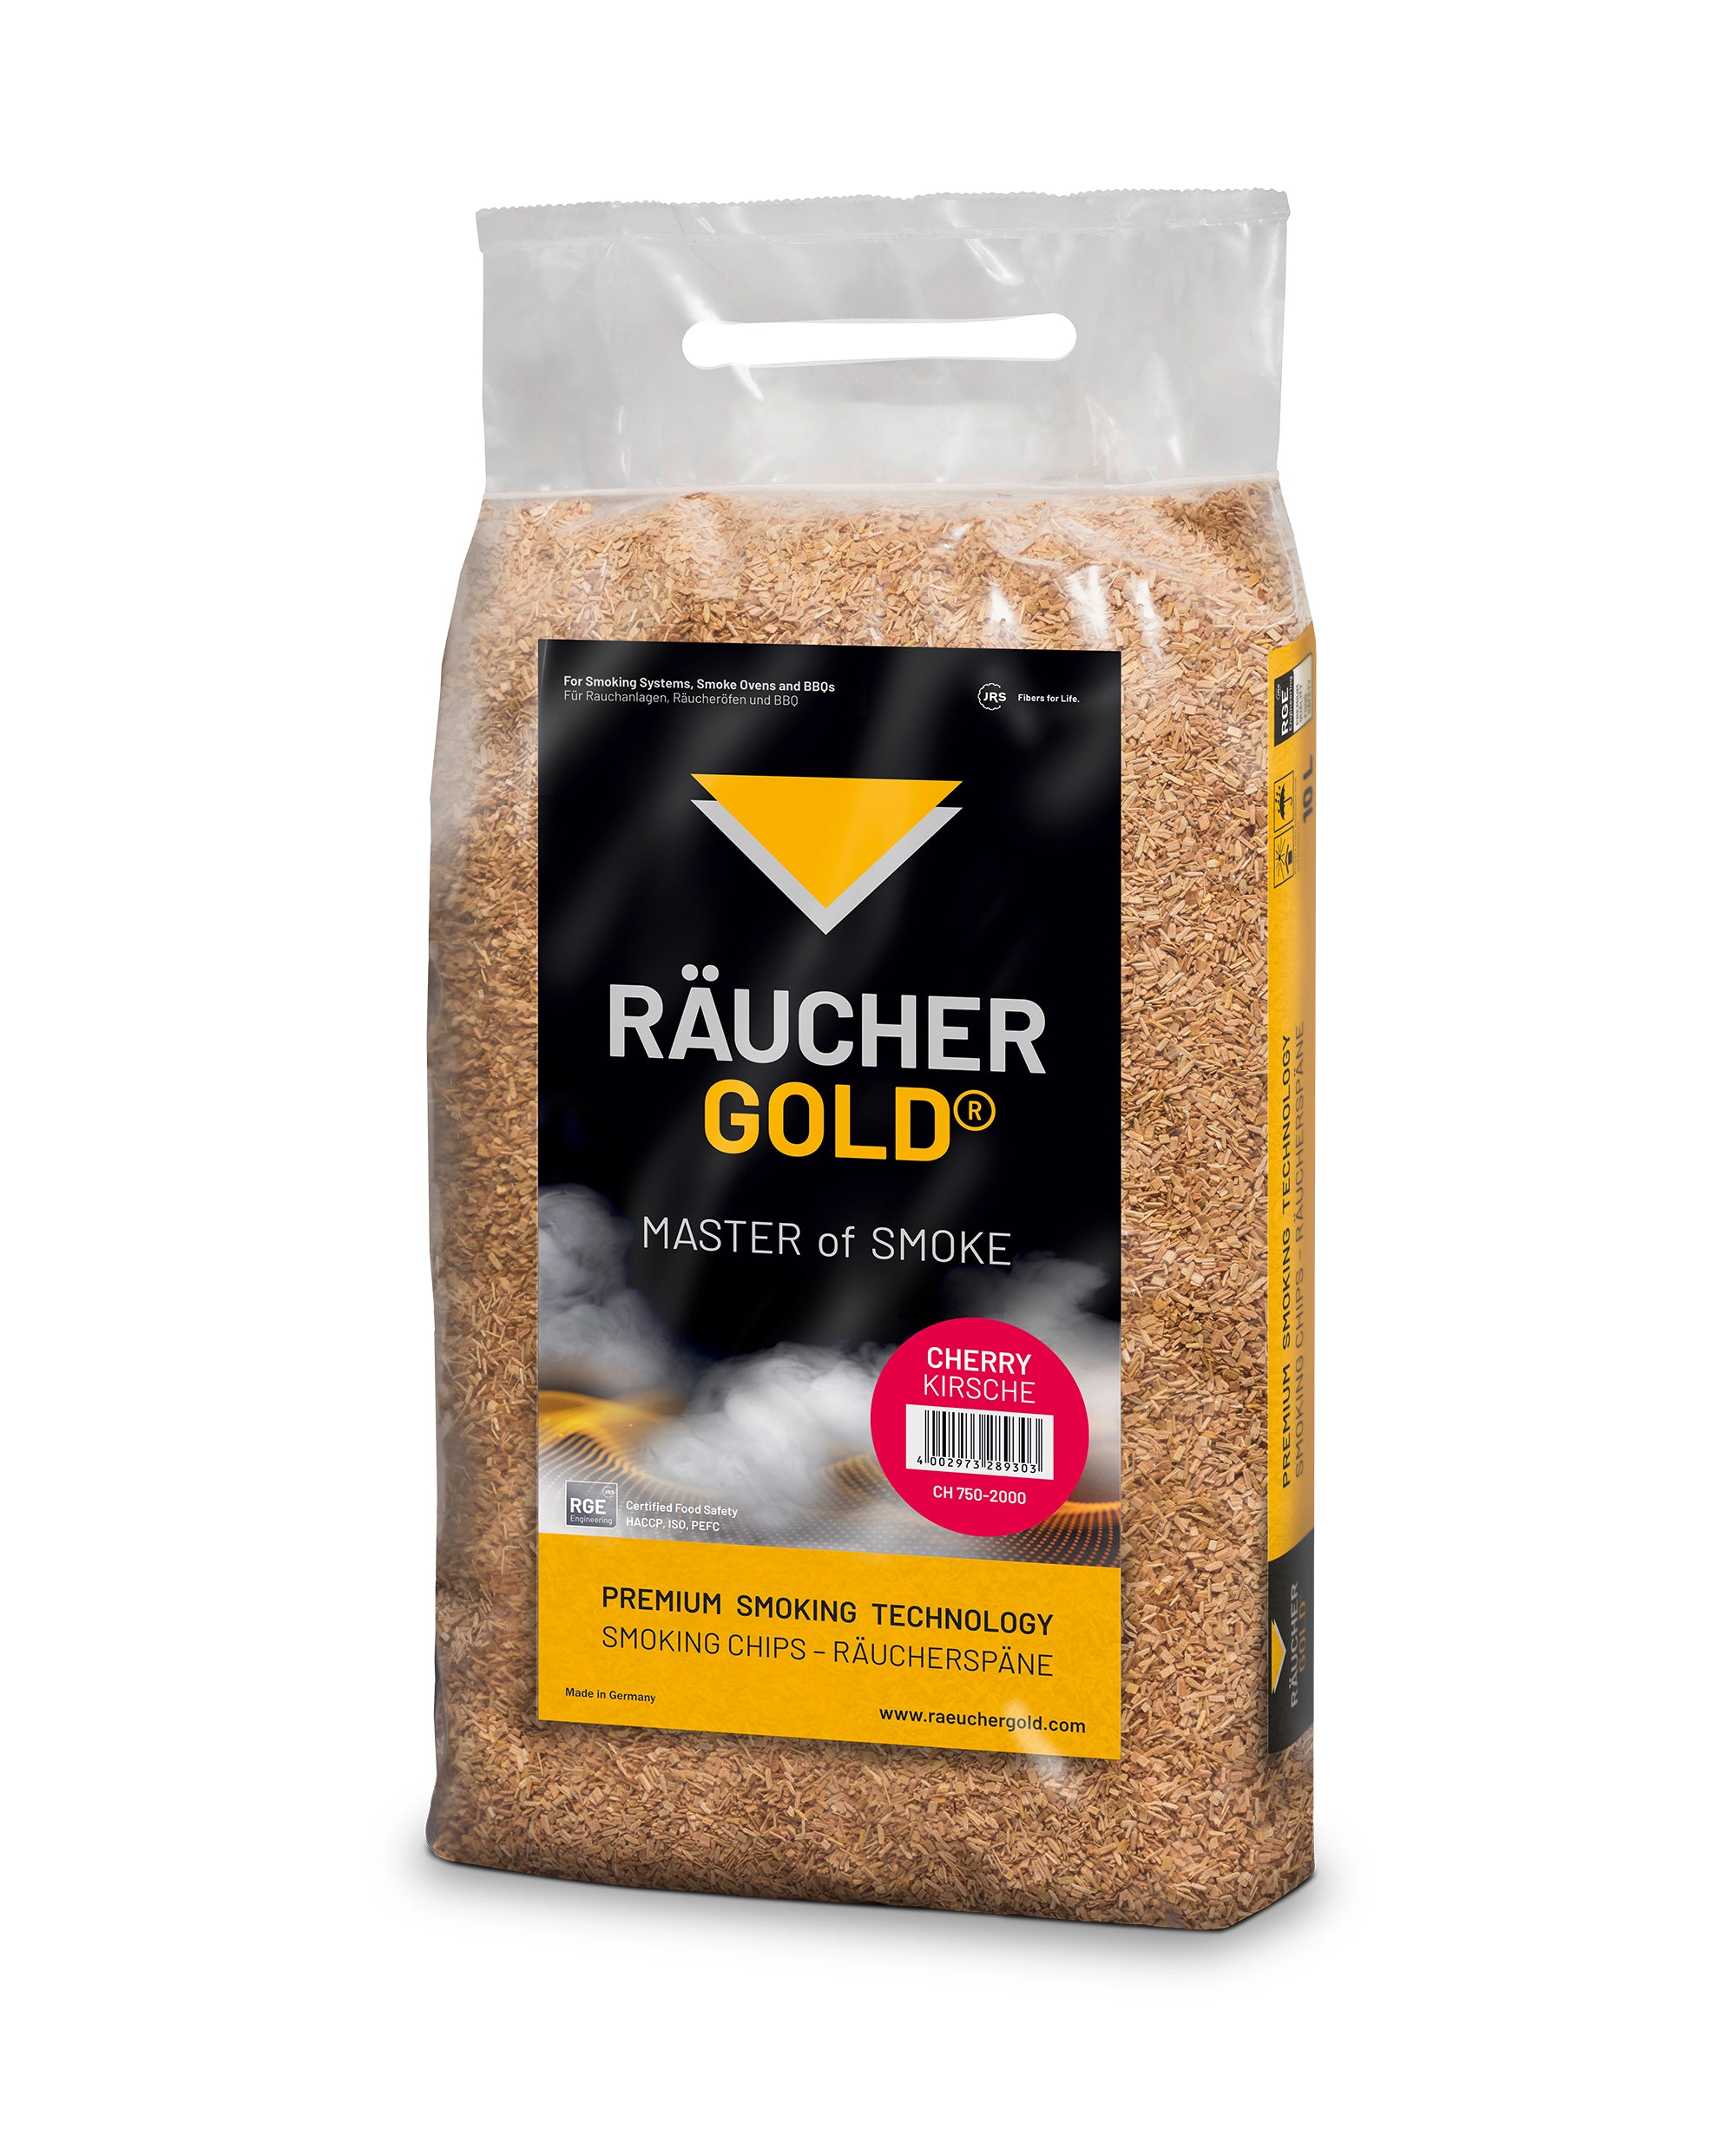 RÄUCHERGOLD® cherry smoking powder CH 750-2000 in a 10 liter bag